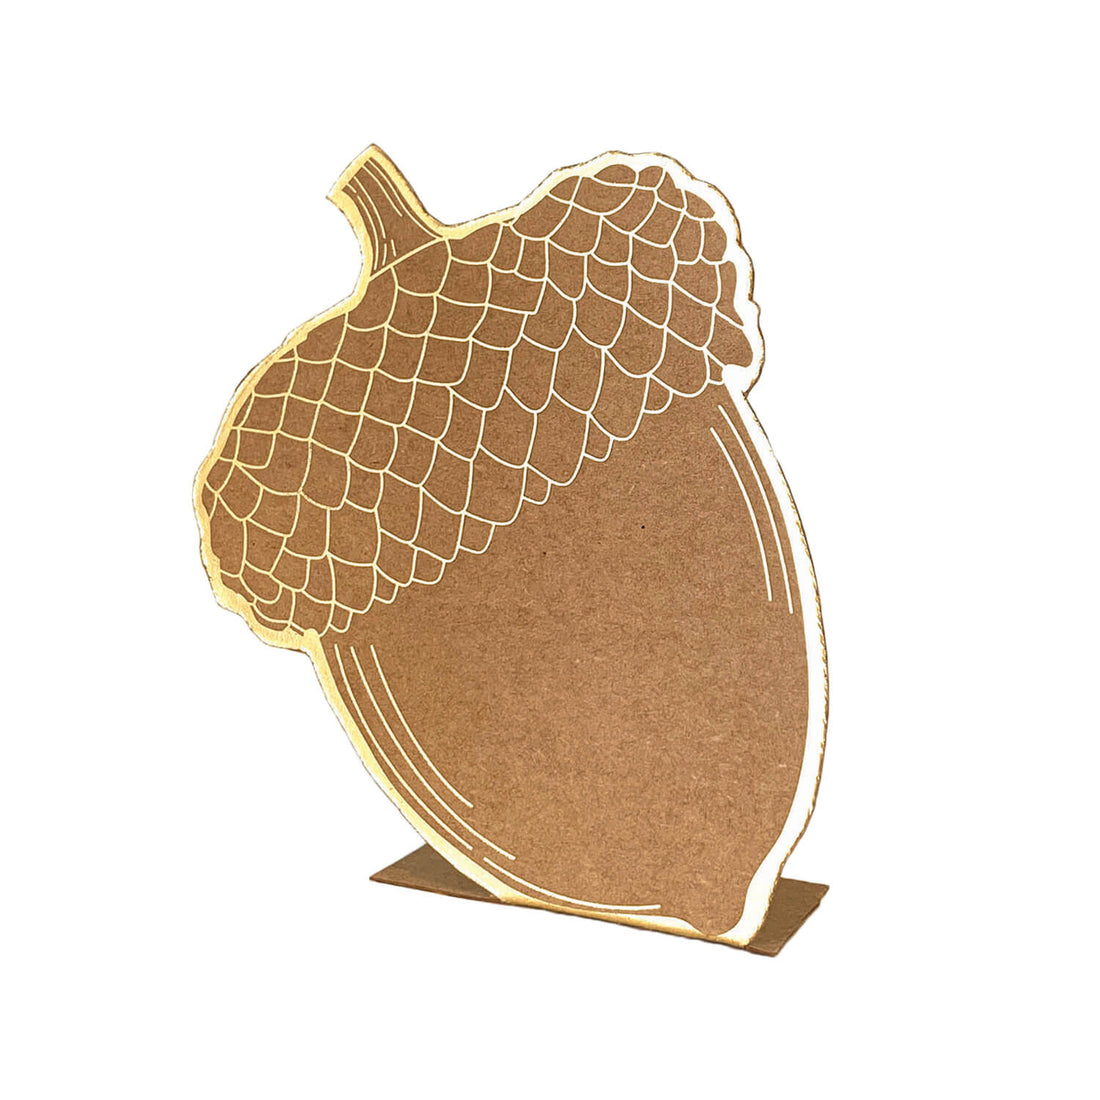 A die-cut kraft paper standing place card of an acorn, featuring gold foil linework.